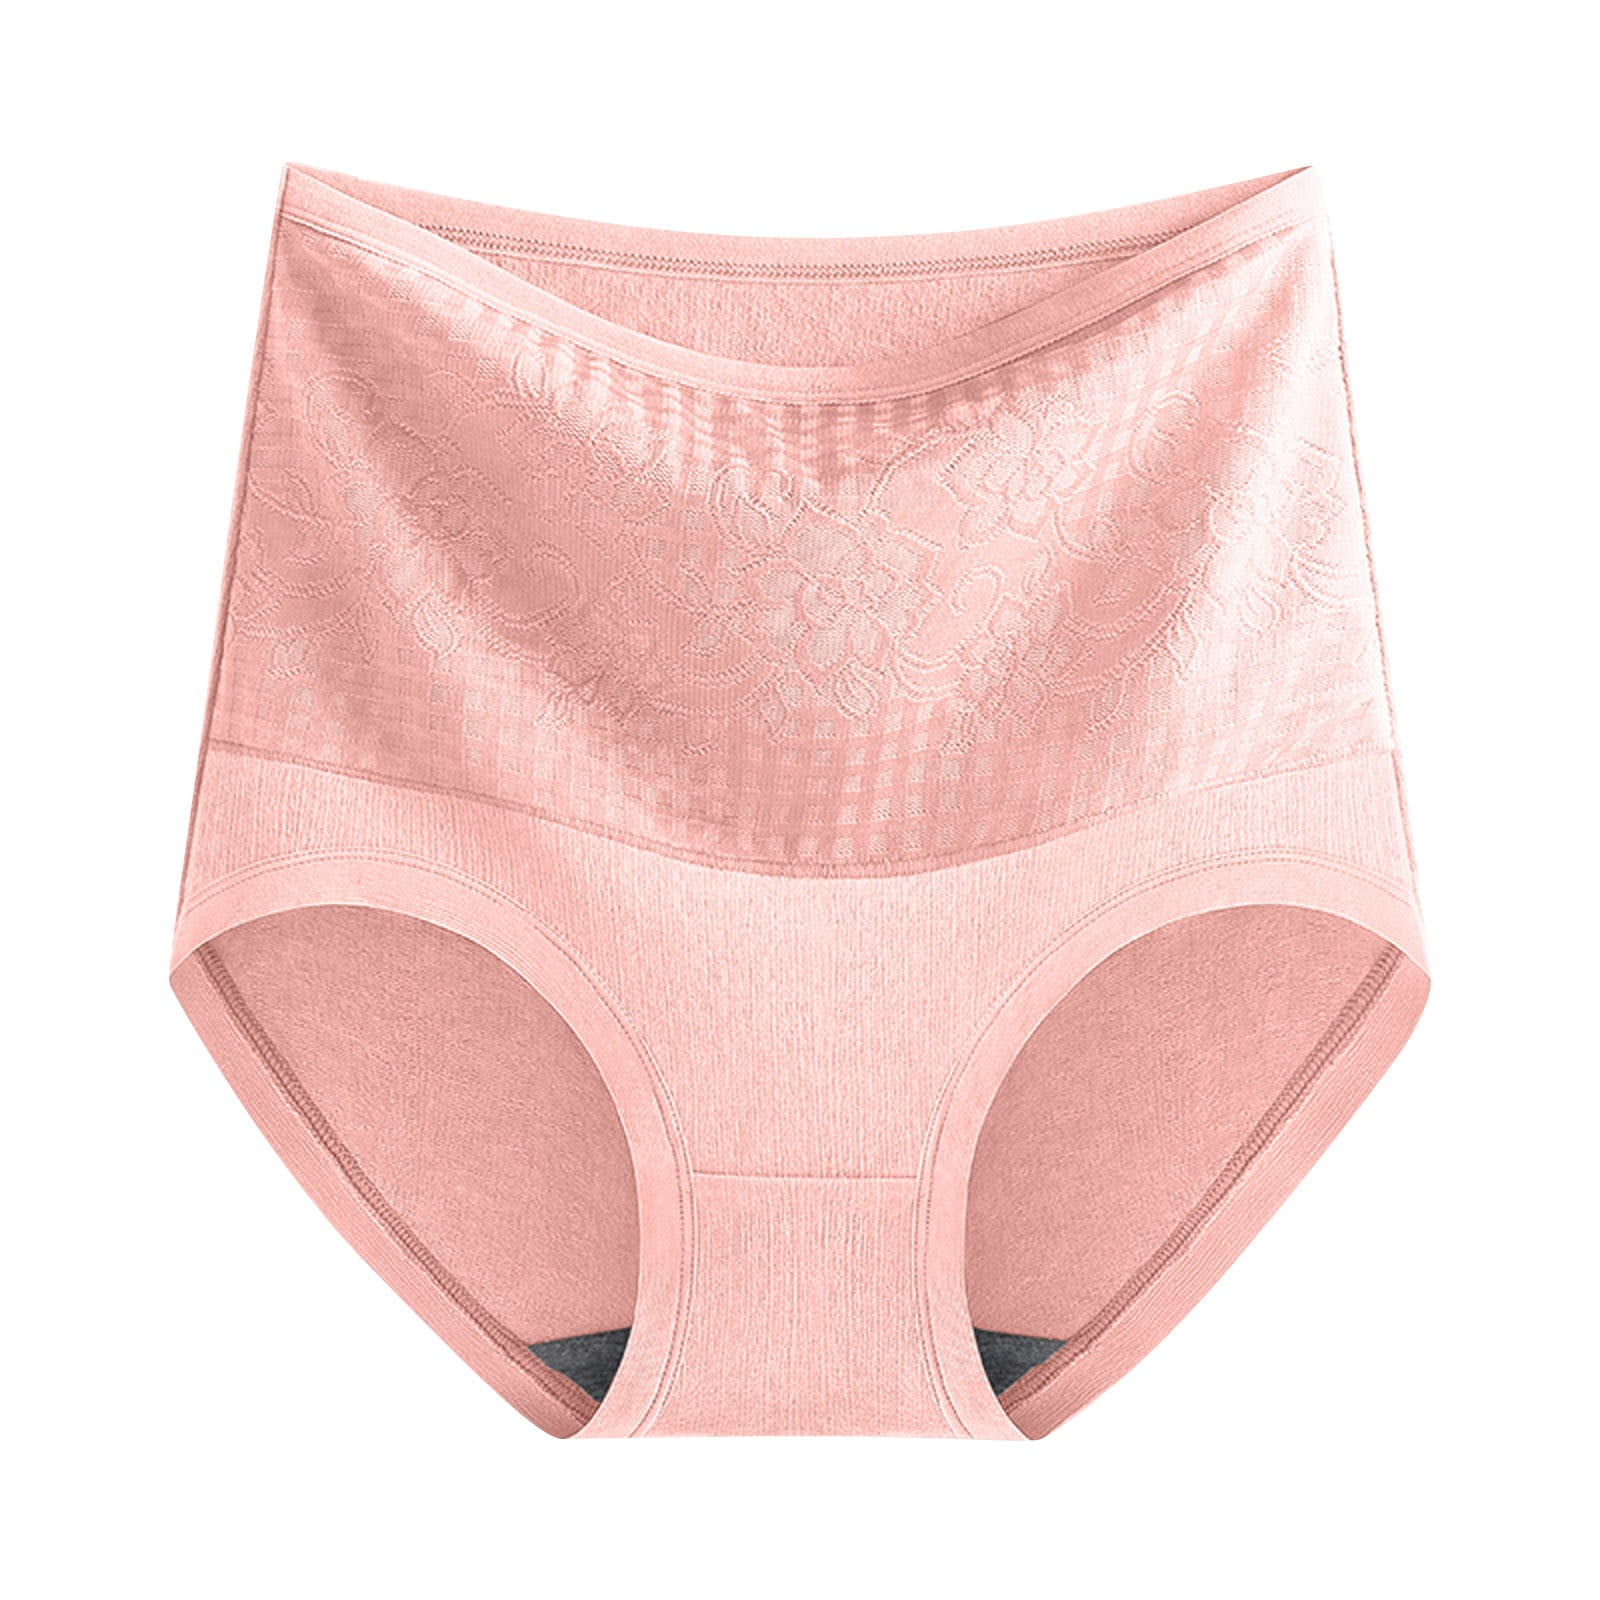 Comfortable Intimate Female Underpants Women Panties All Season